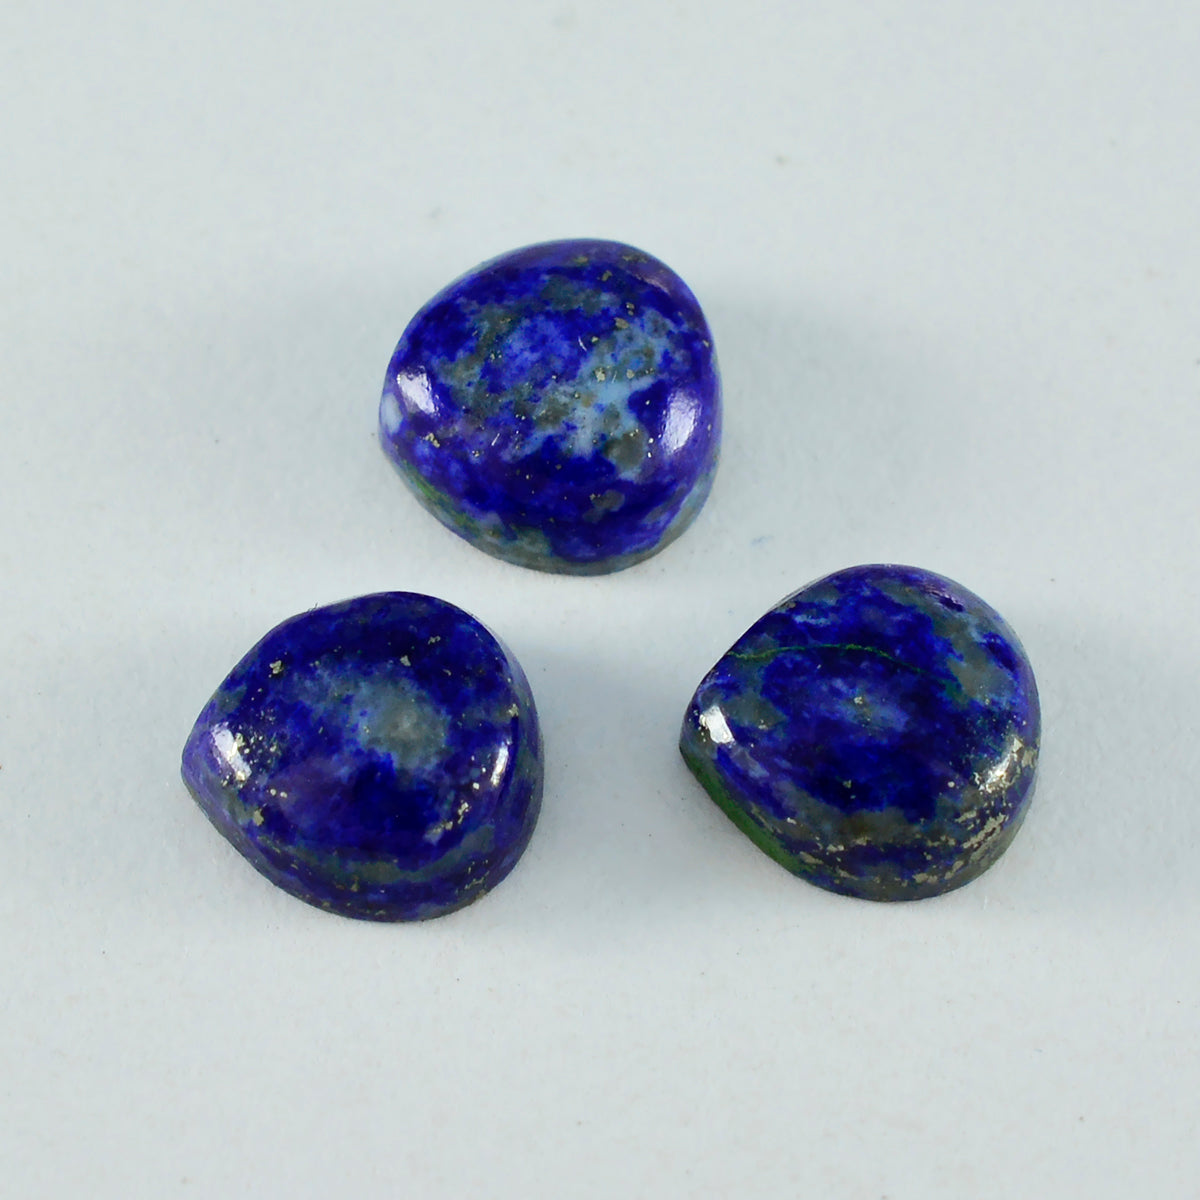 Riyogems 1PC Blauwe Lapis Lazuli Cabochon 13x13 mm Hartvorm aantrekkelijke Kwaliteit Losse Edelsteen